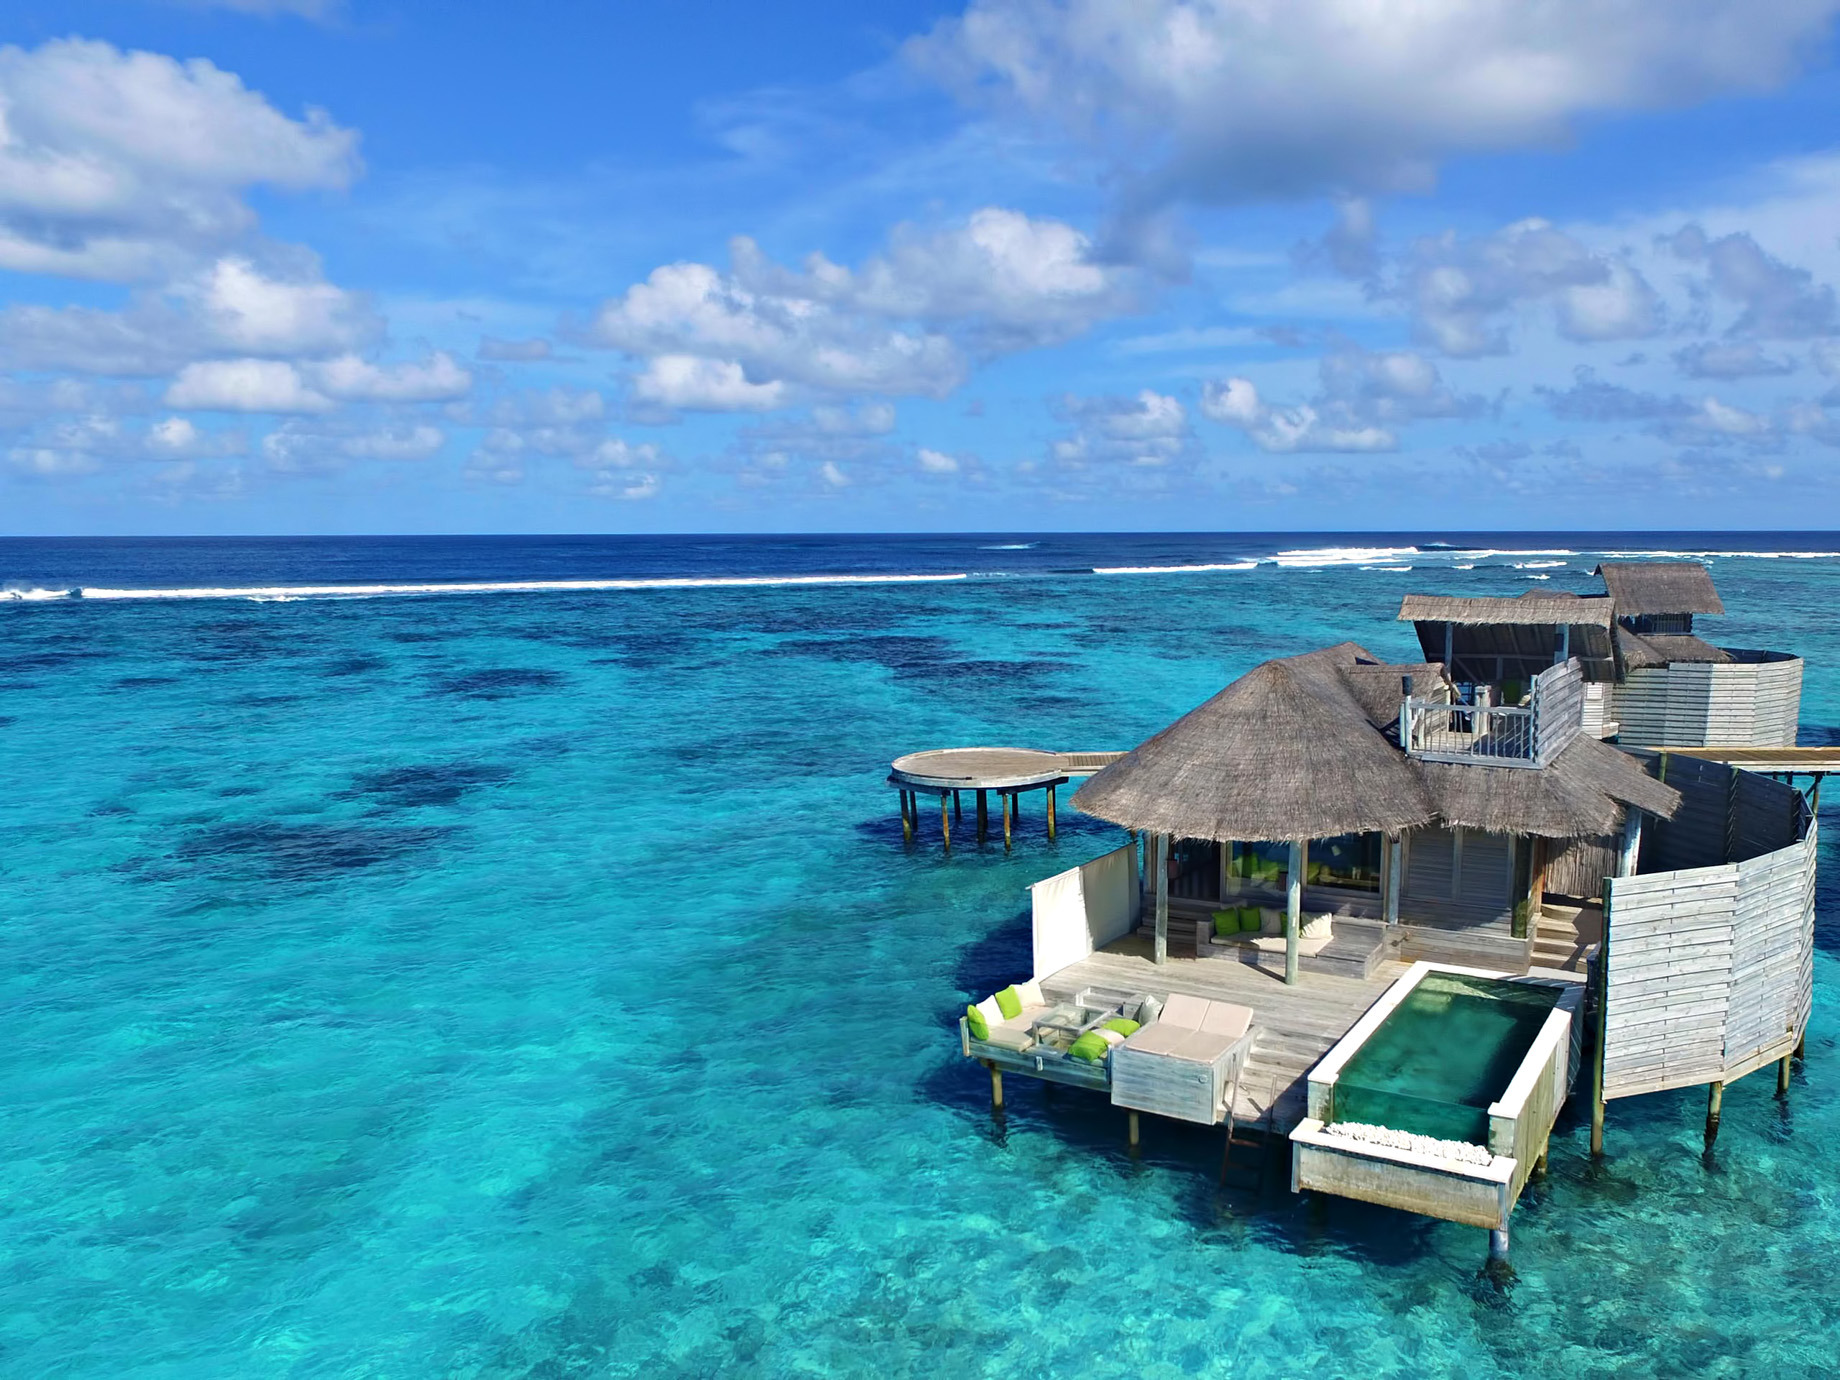 Six Senses Laamu Resort - Laamu Atoll, Maldives - Overwater Villa with Pool